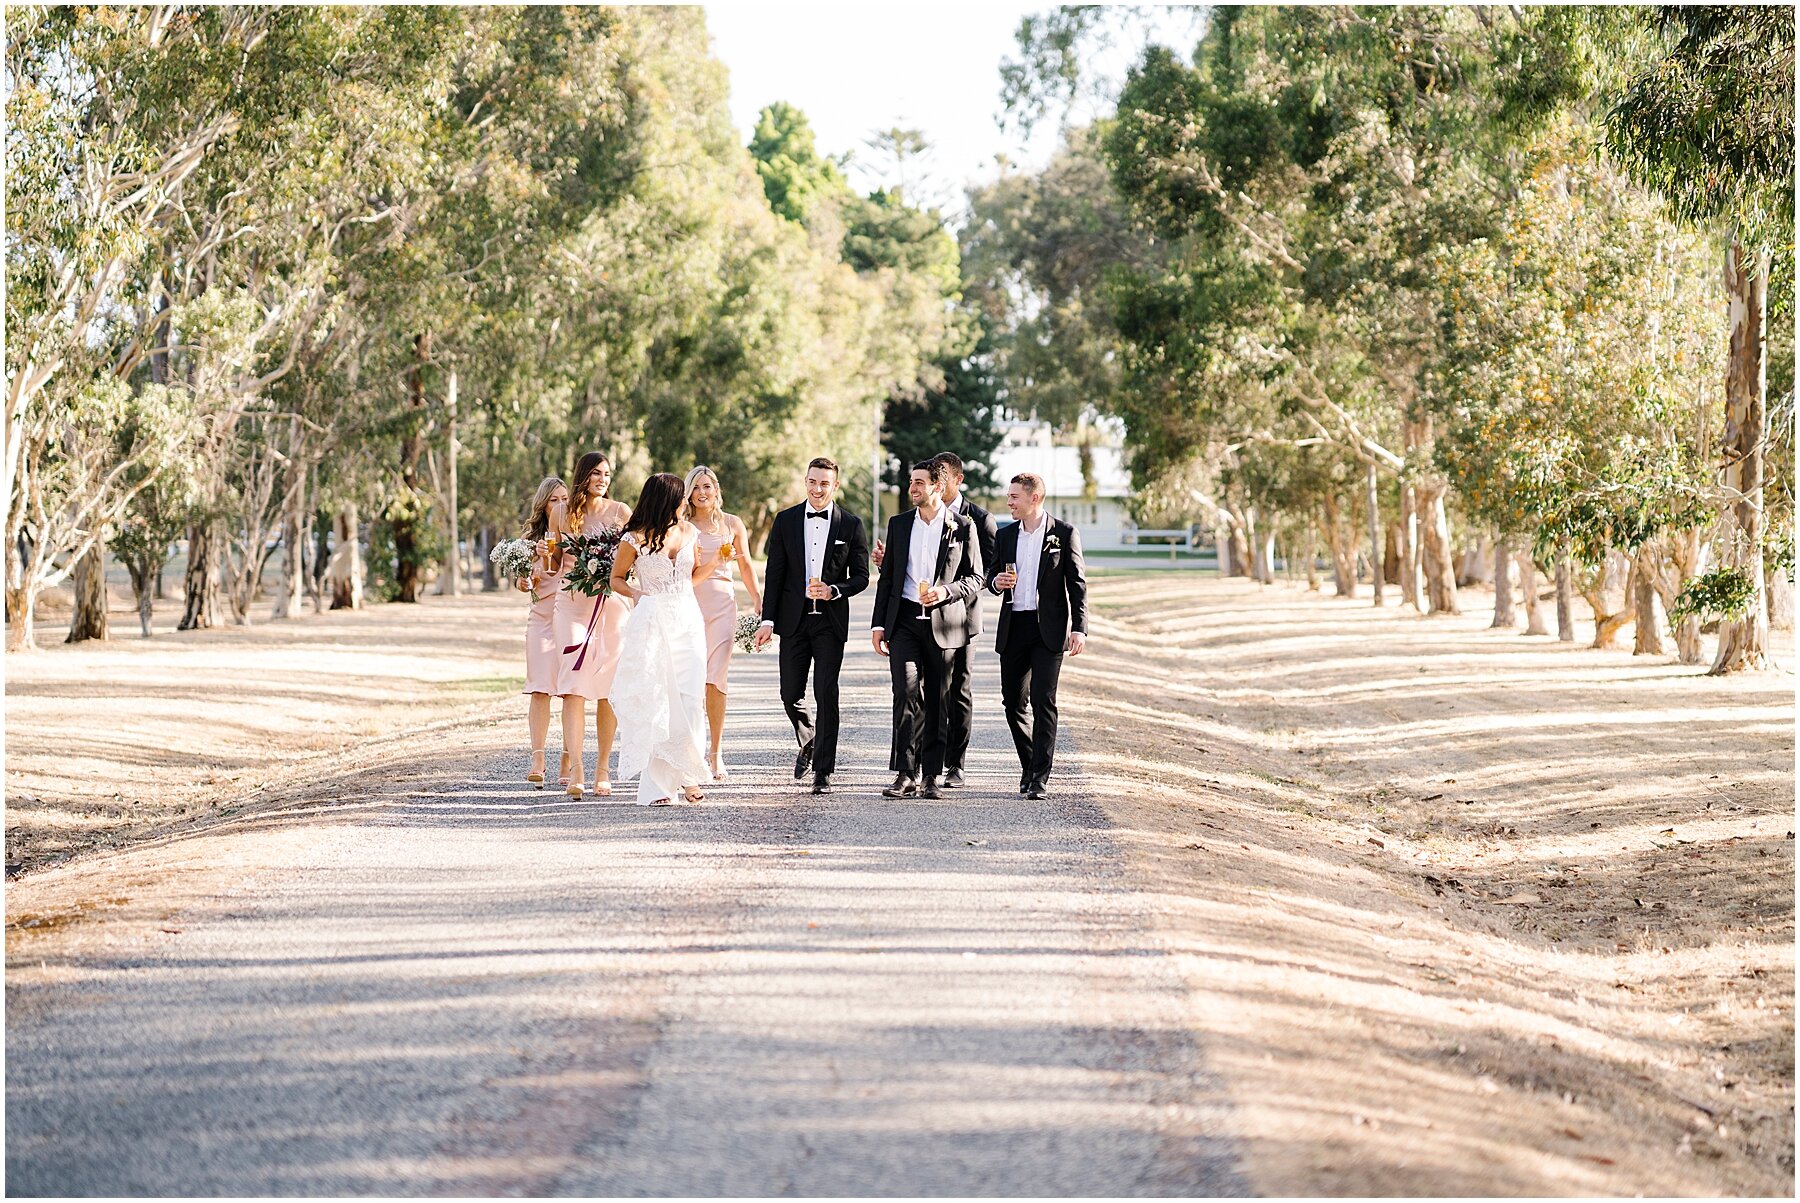 Perth Wedding Photography